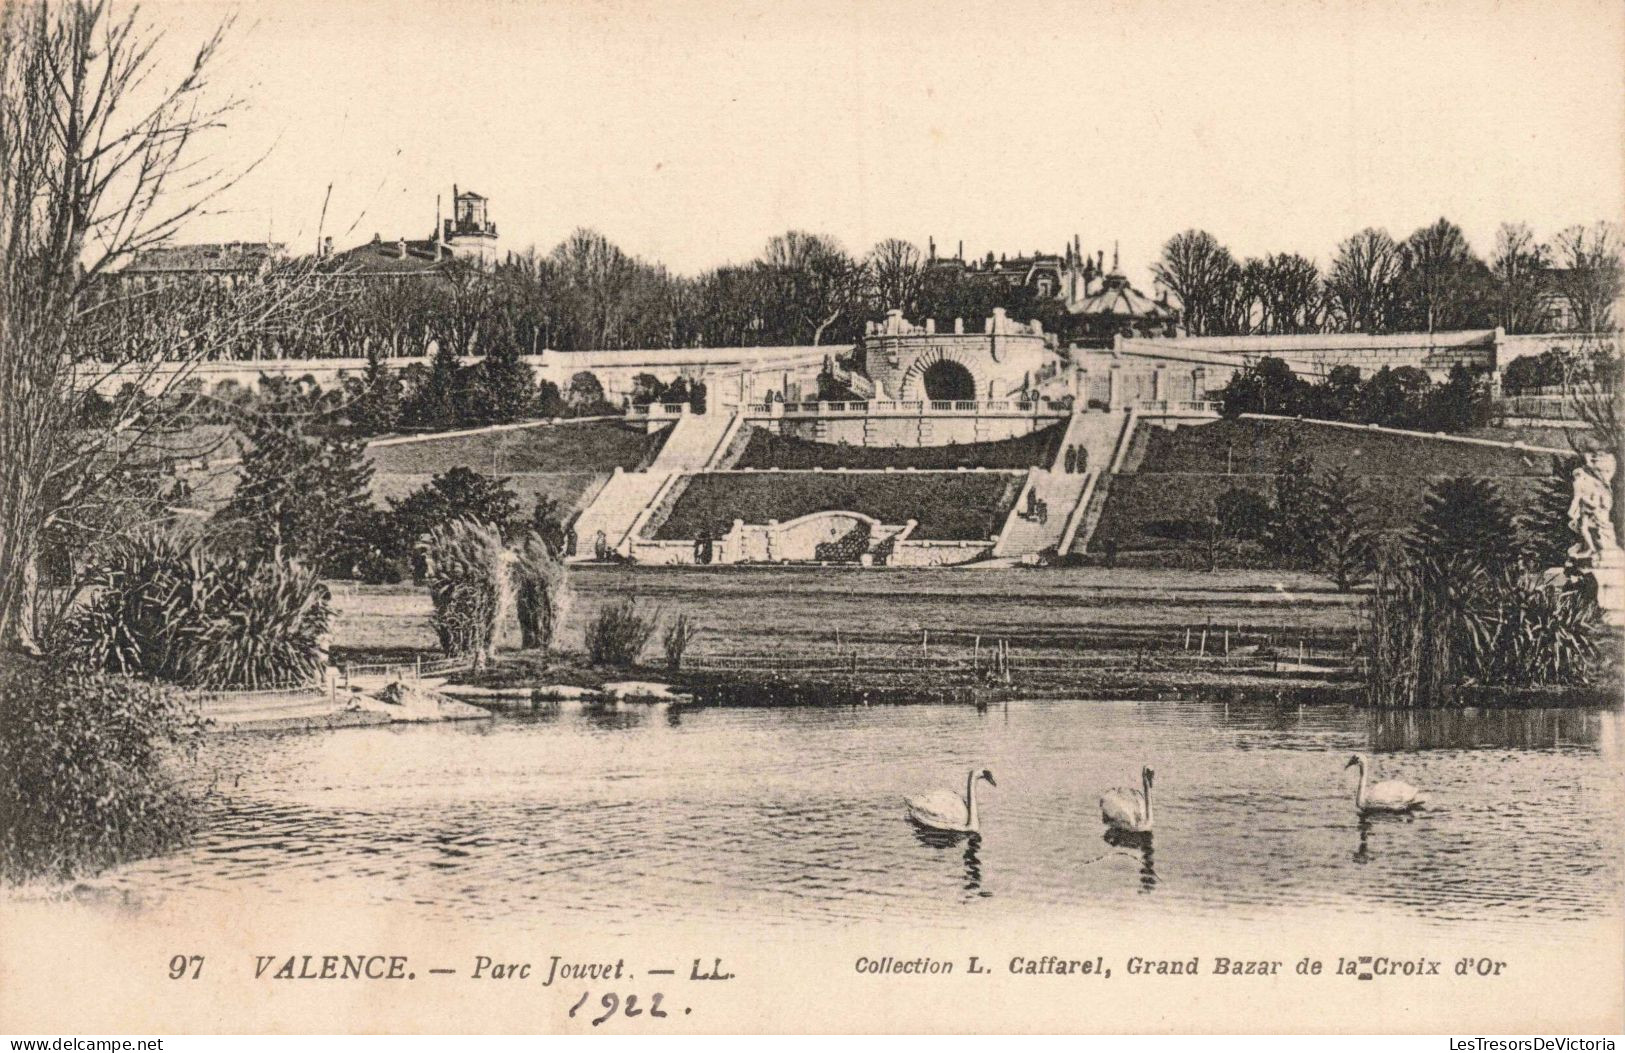 FRANCE - Valence - Parc Jouvet - LL - Cygnes - Lac - Carte Postale Ancienne - Valence